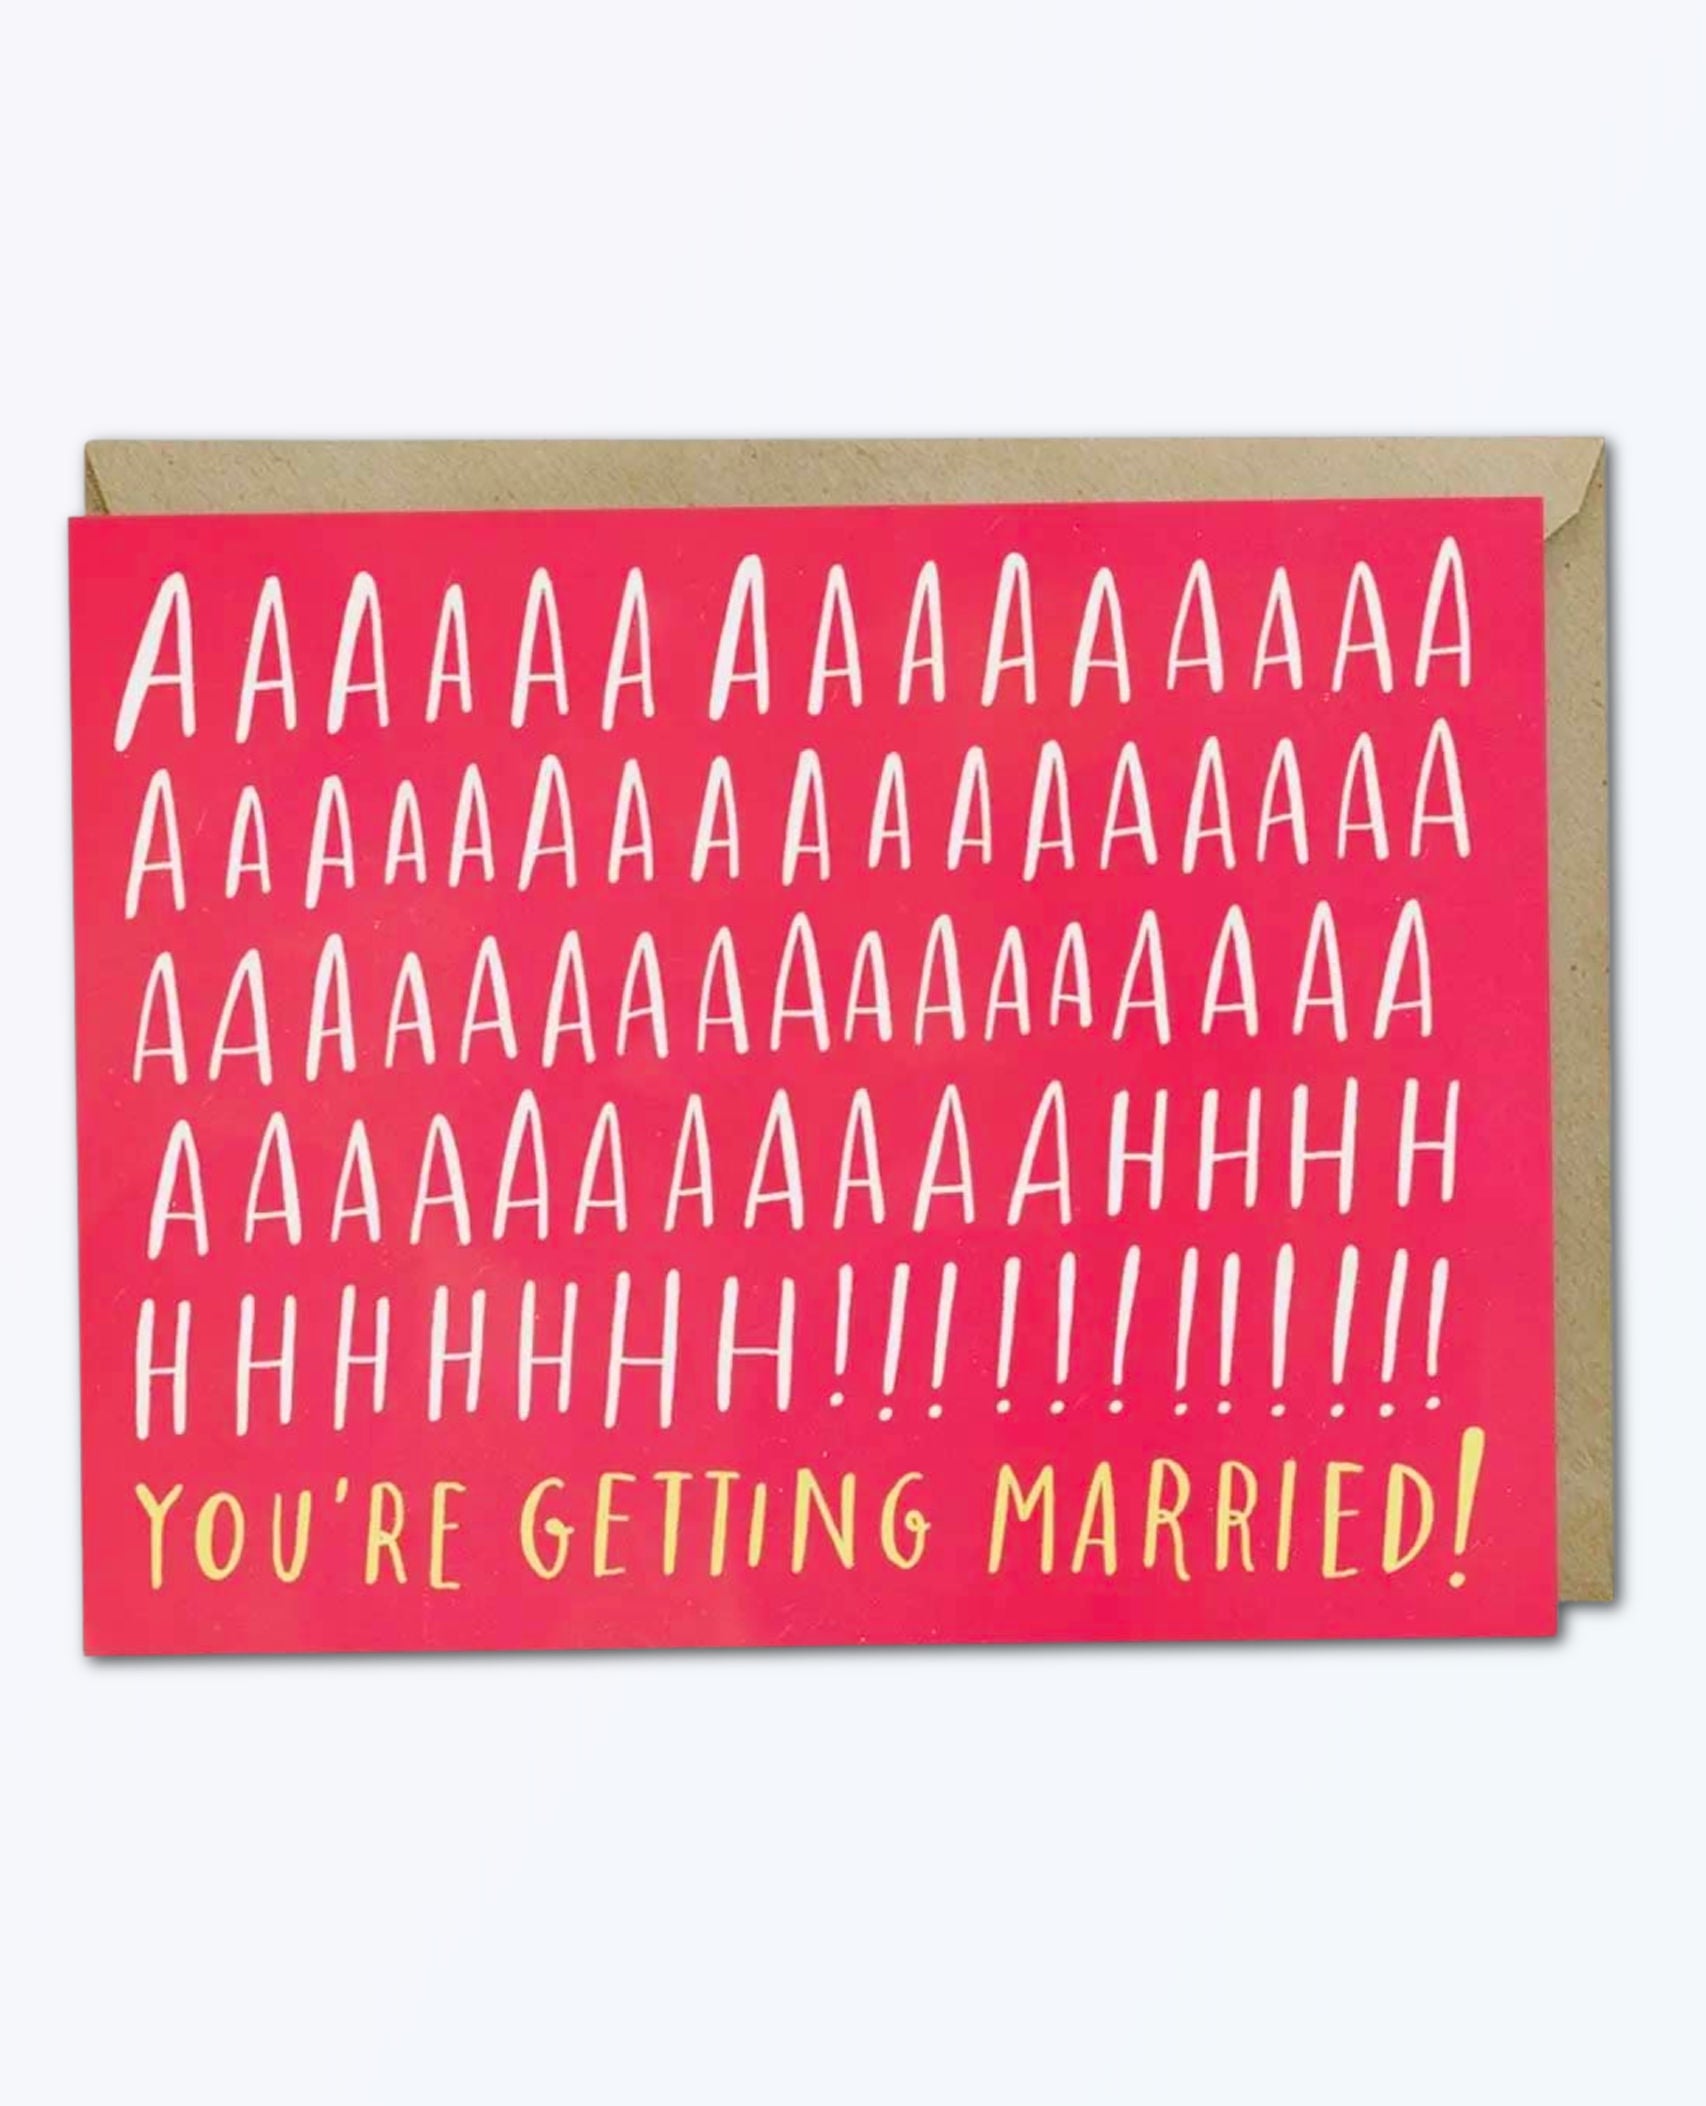 Aaah Married Engagement Card